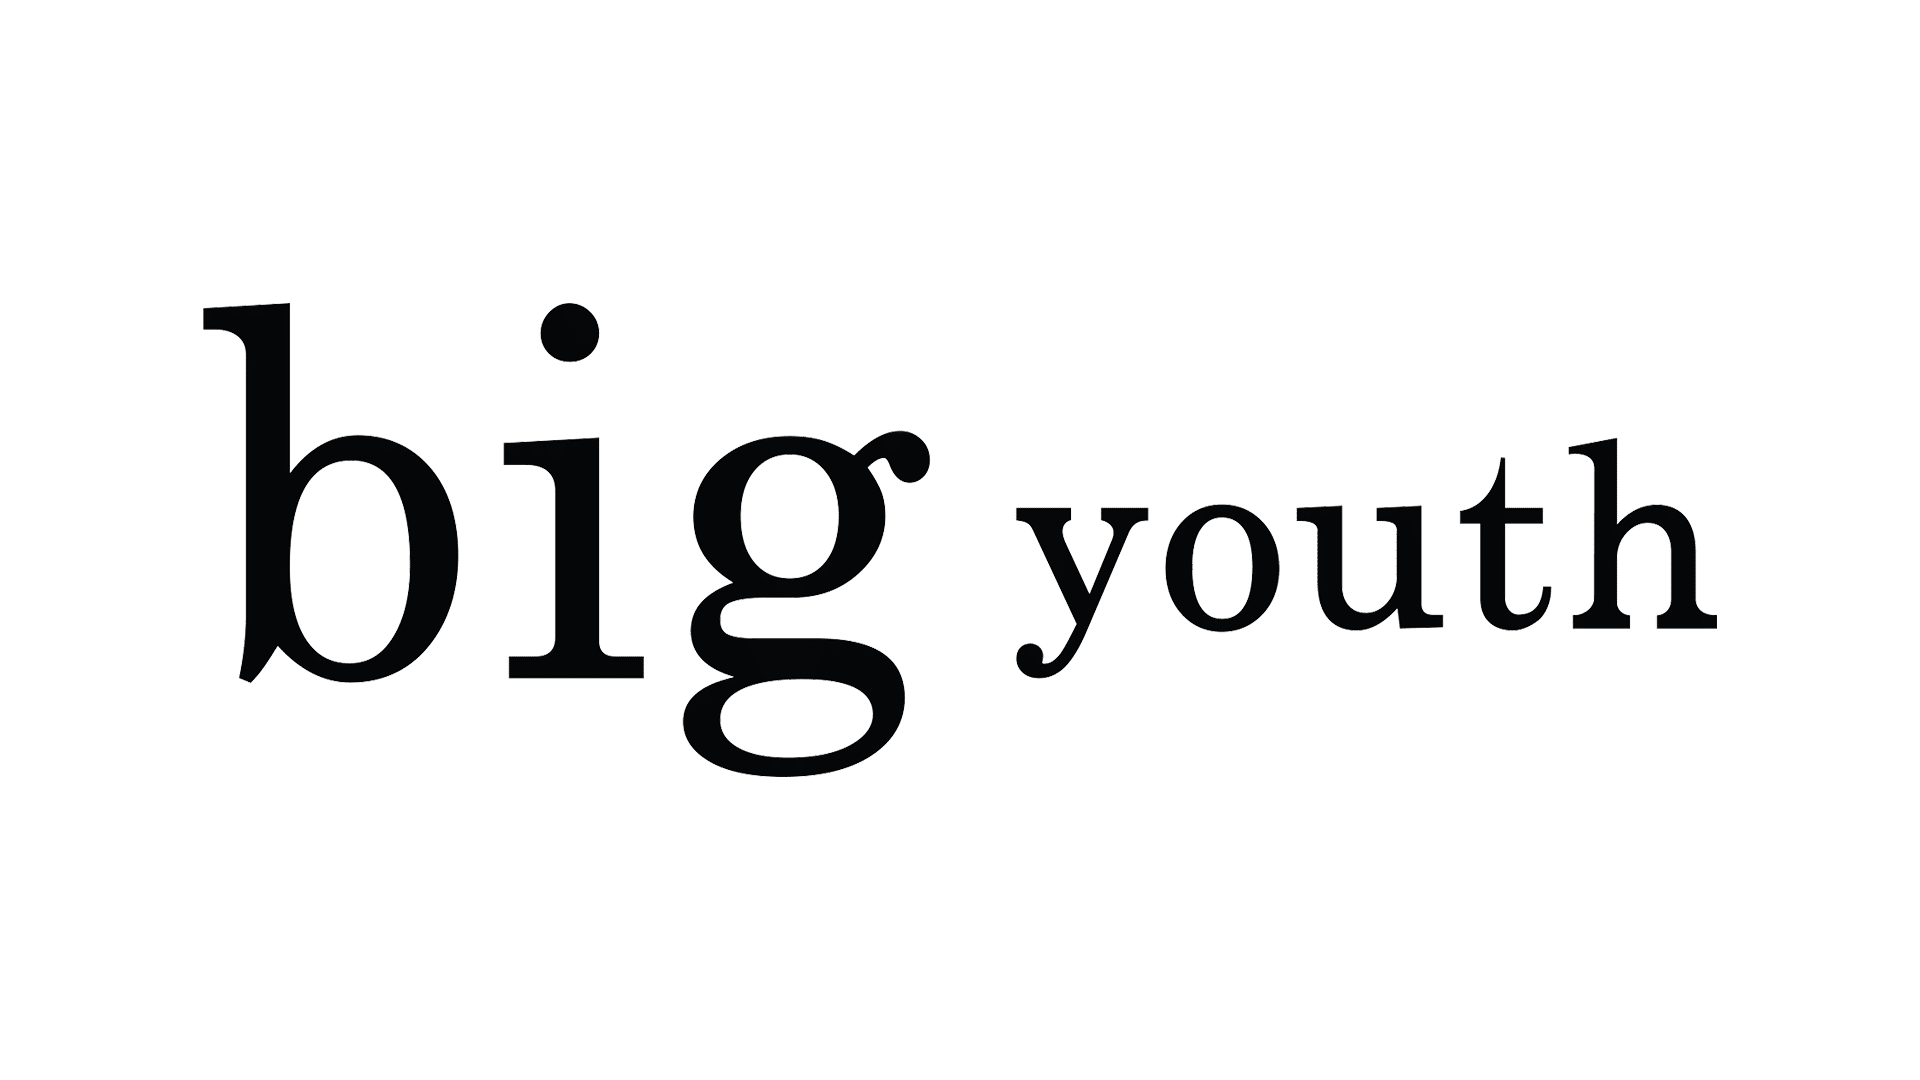 logobig youth1599666176 - HNET - Entreprise de nettoyage général - [Hnet]